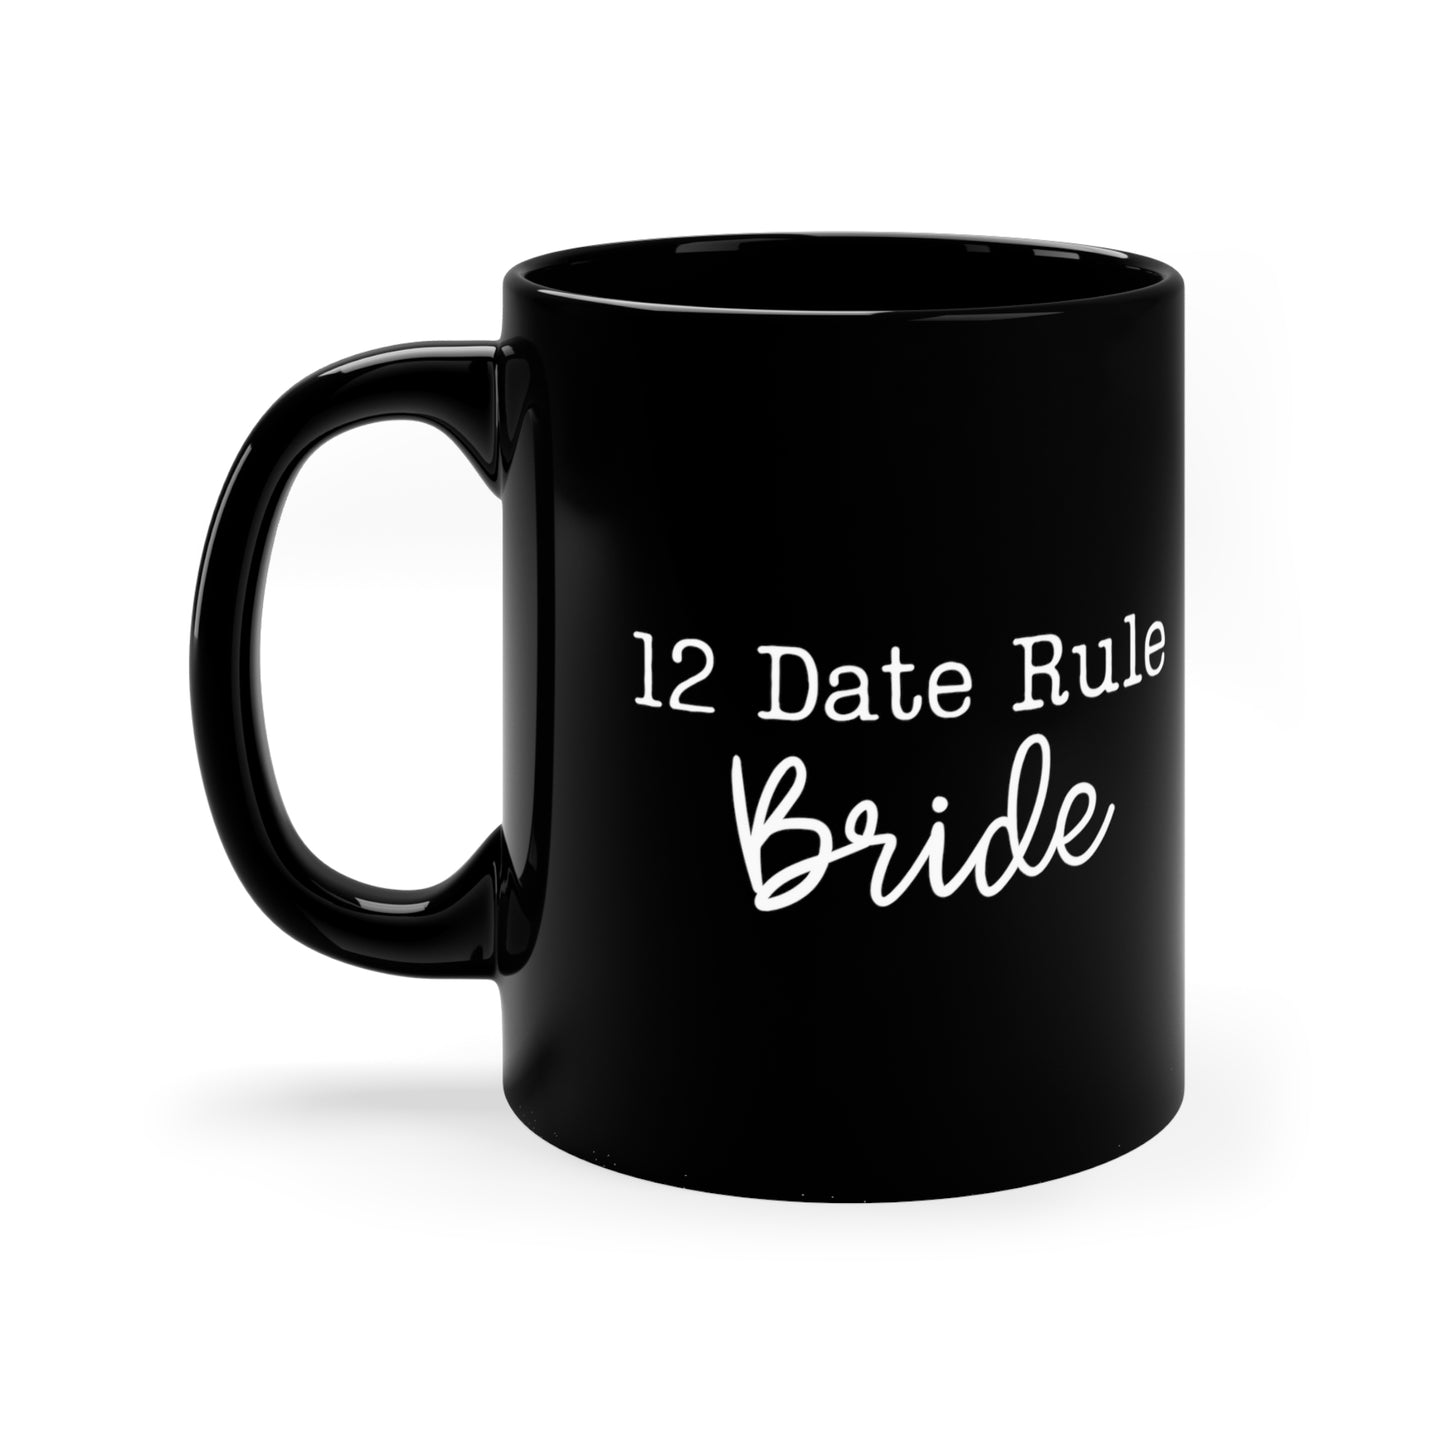 12 Date Rule Mug (Black)